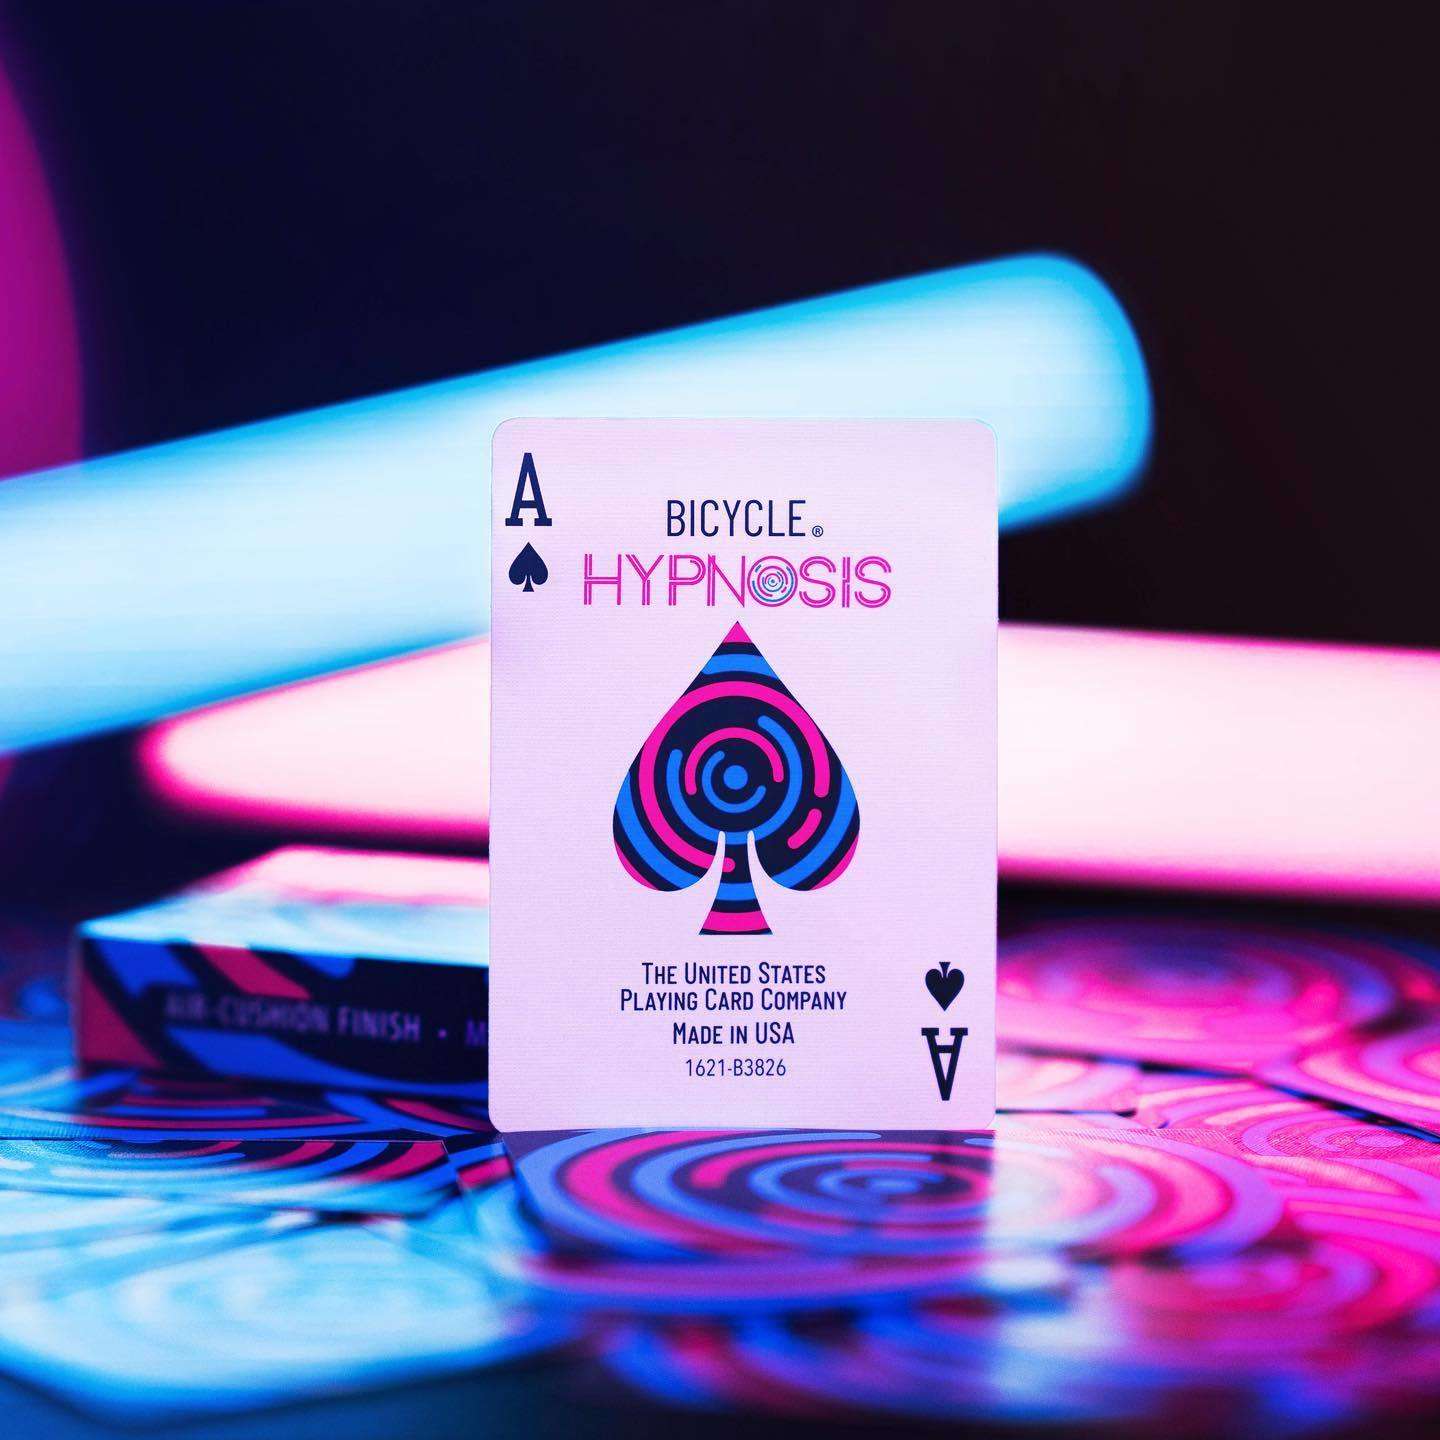 PlayingCardDecks.com-Hypnosis v2 Bicycle Playing Cards